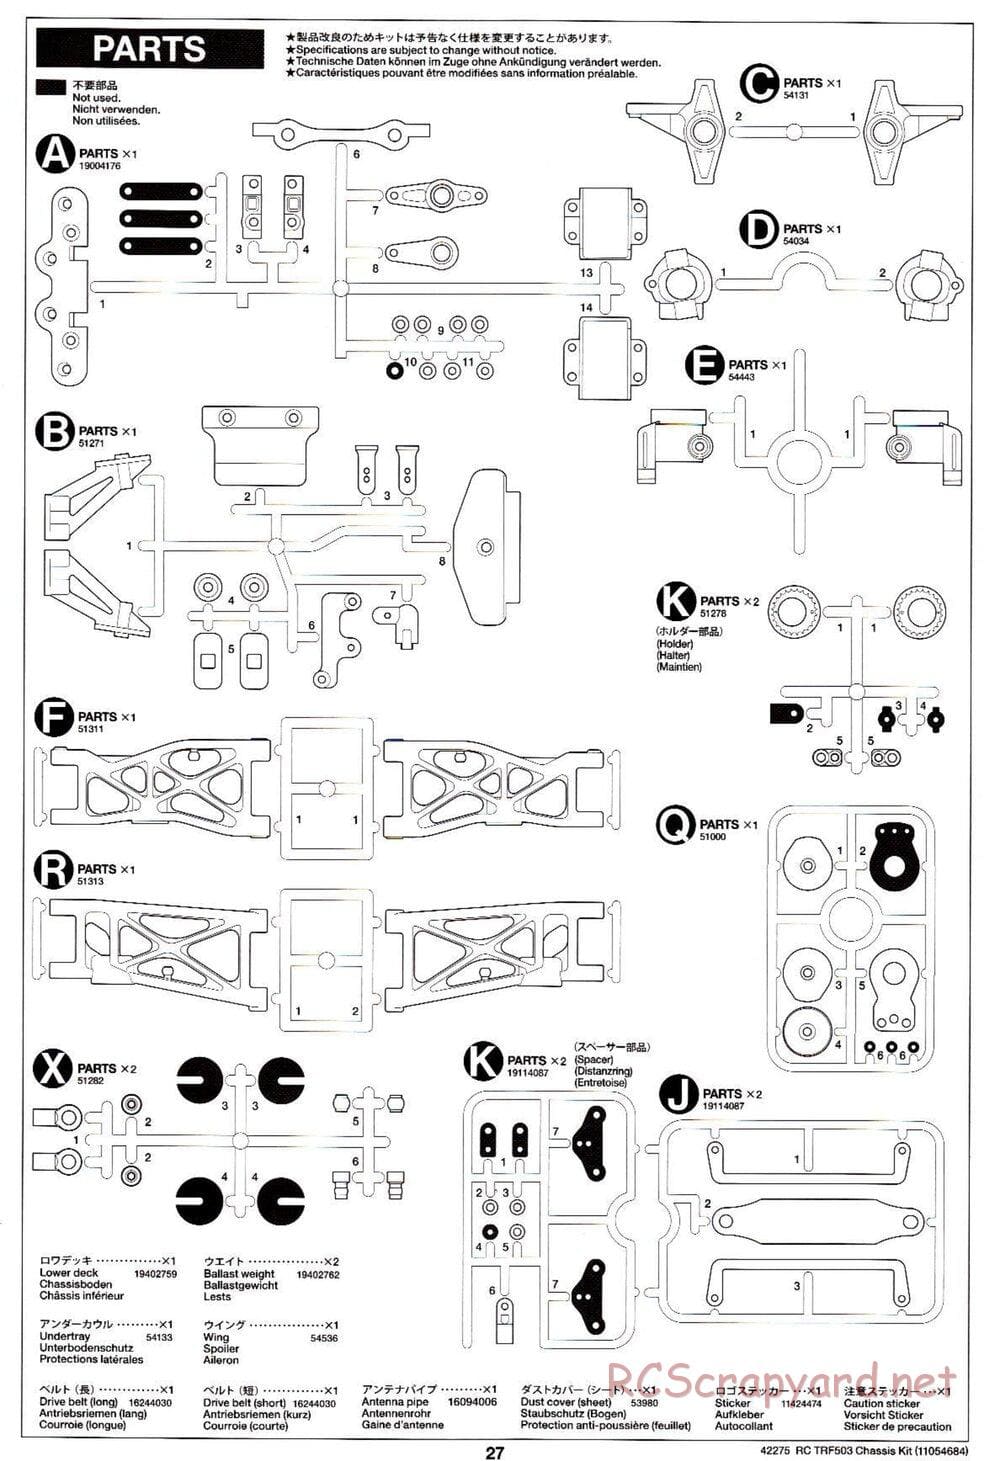 Tamiya - TRF503 Chassis - Manual - Page 27